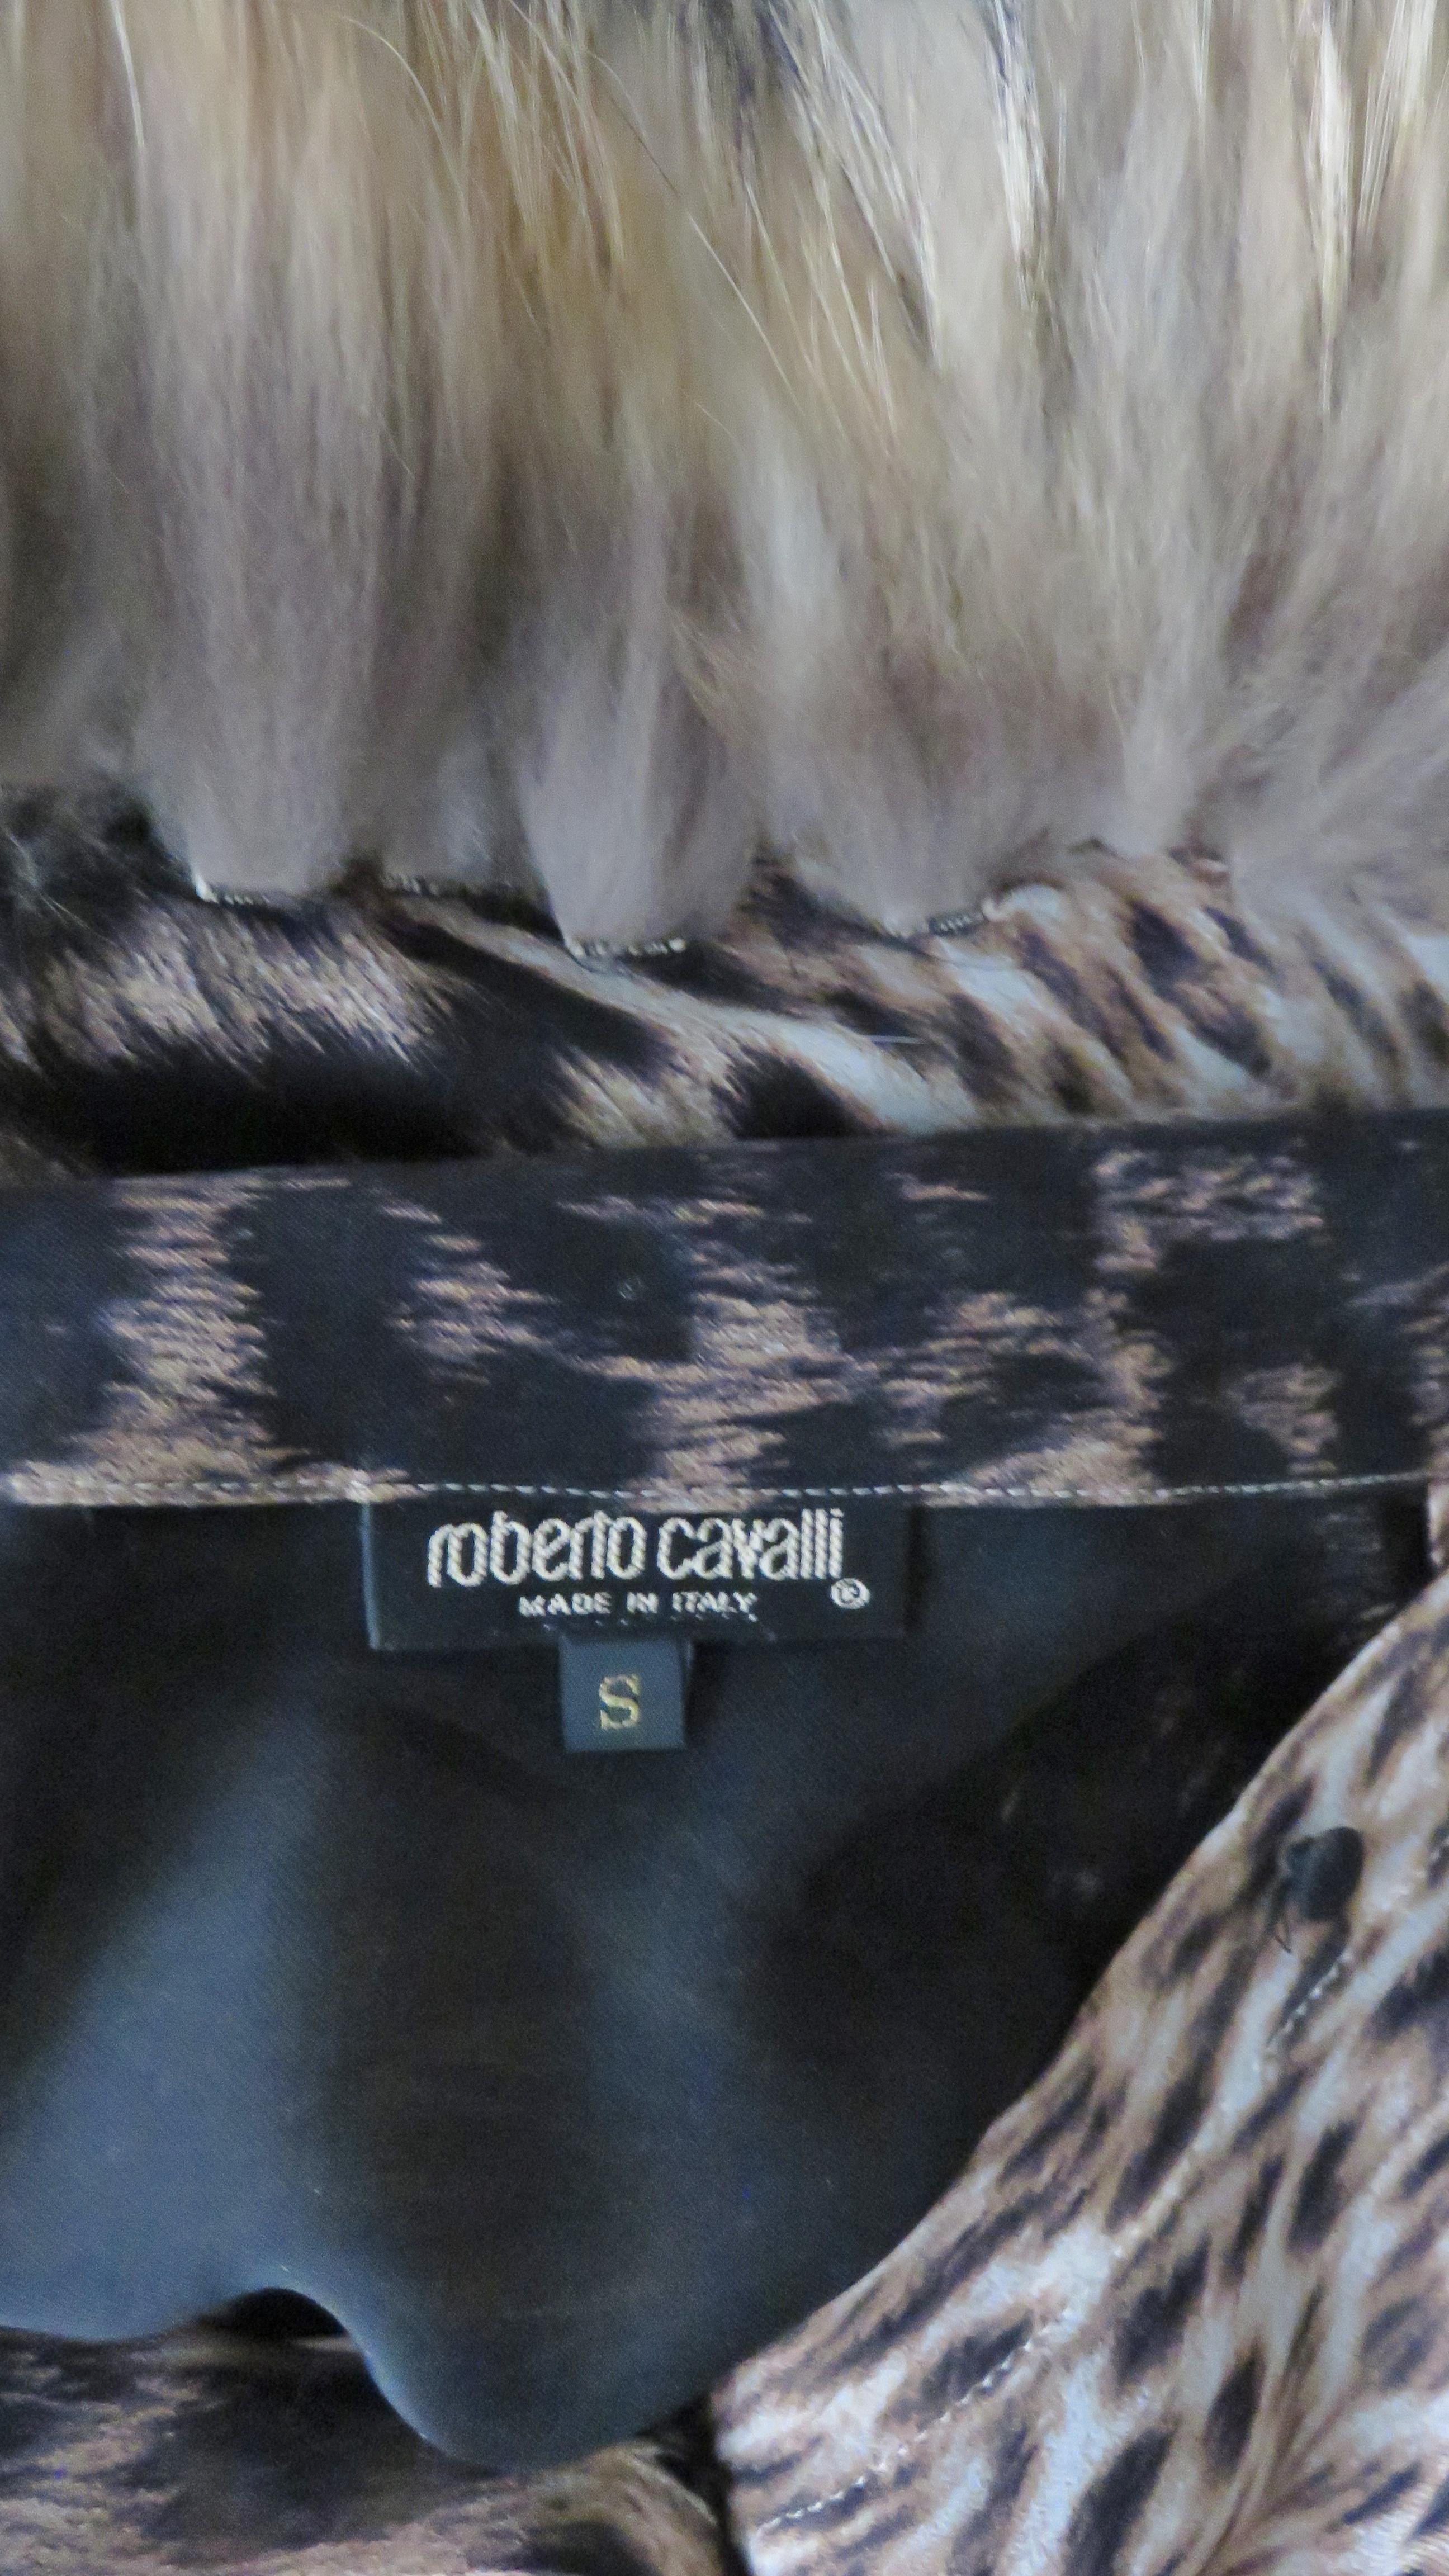 Roberto Cavalli Leopard Print Silk Shirt with Fur Trim Sleeves 9